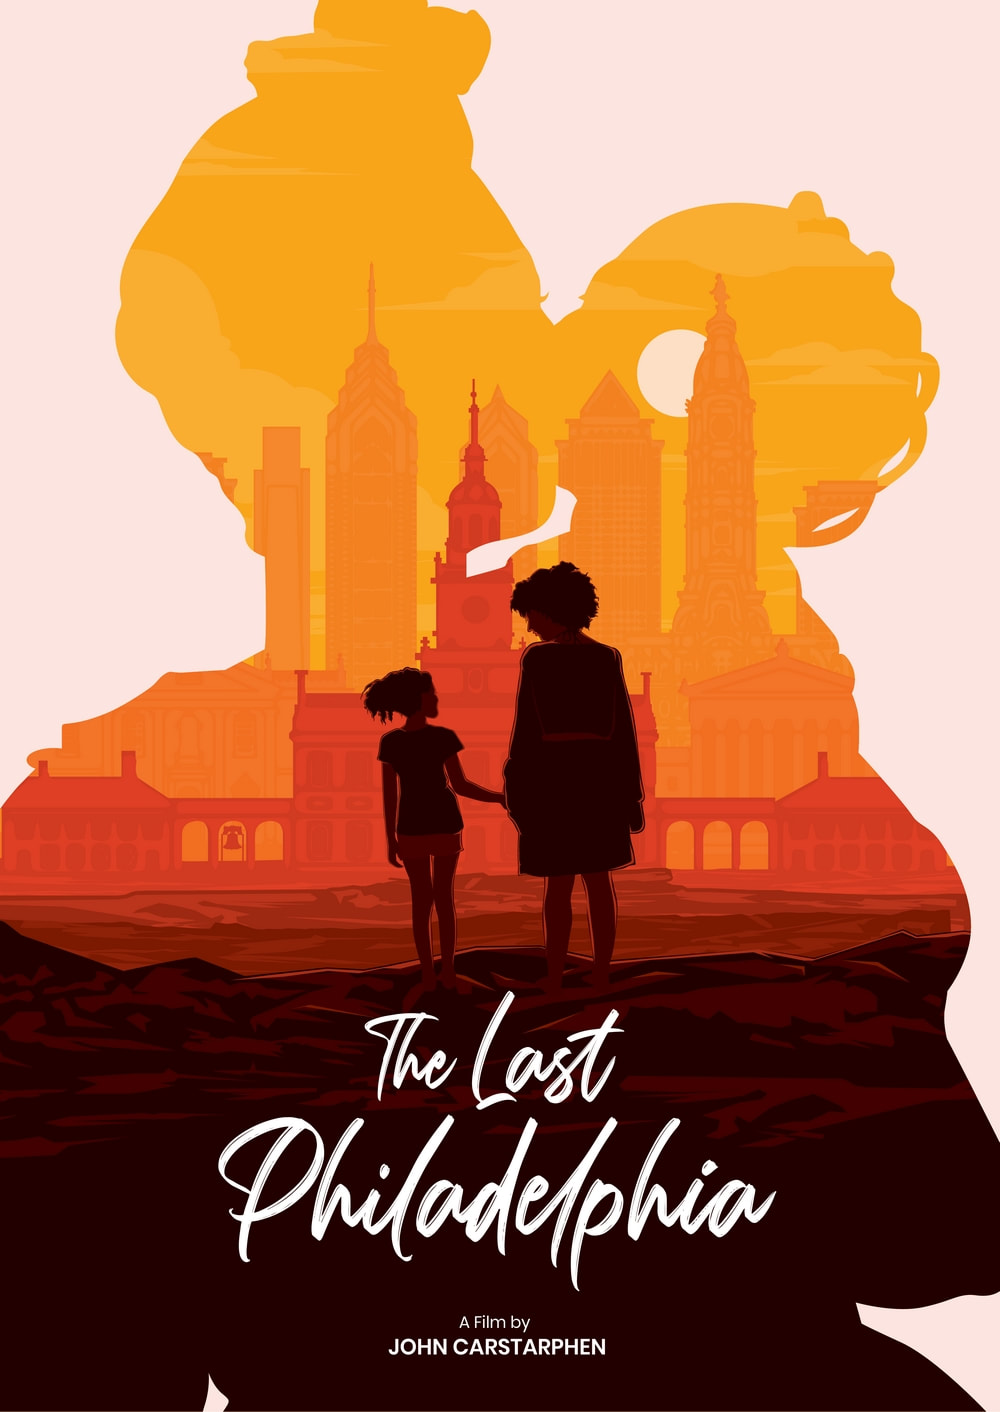 The Last Philadelphia poster.